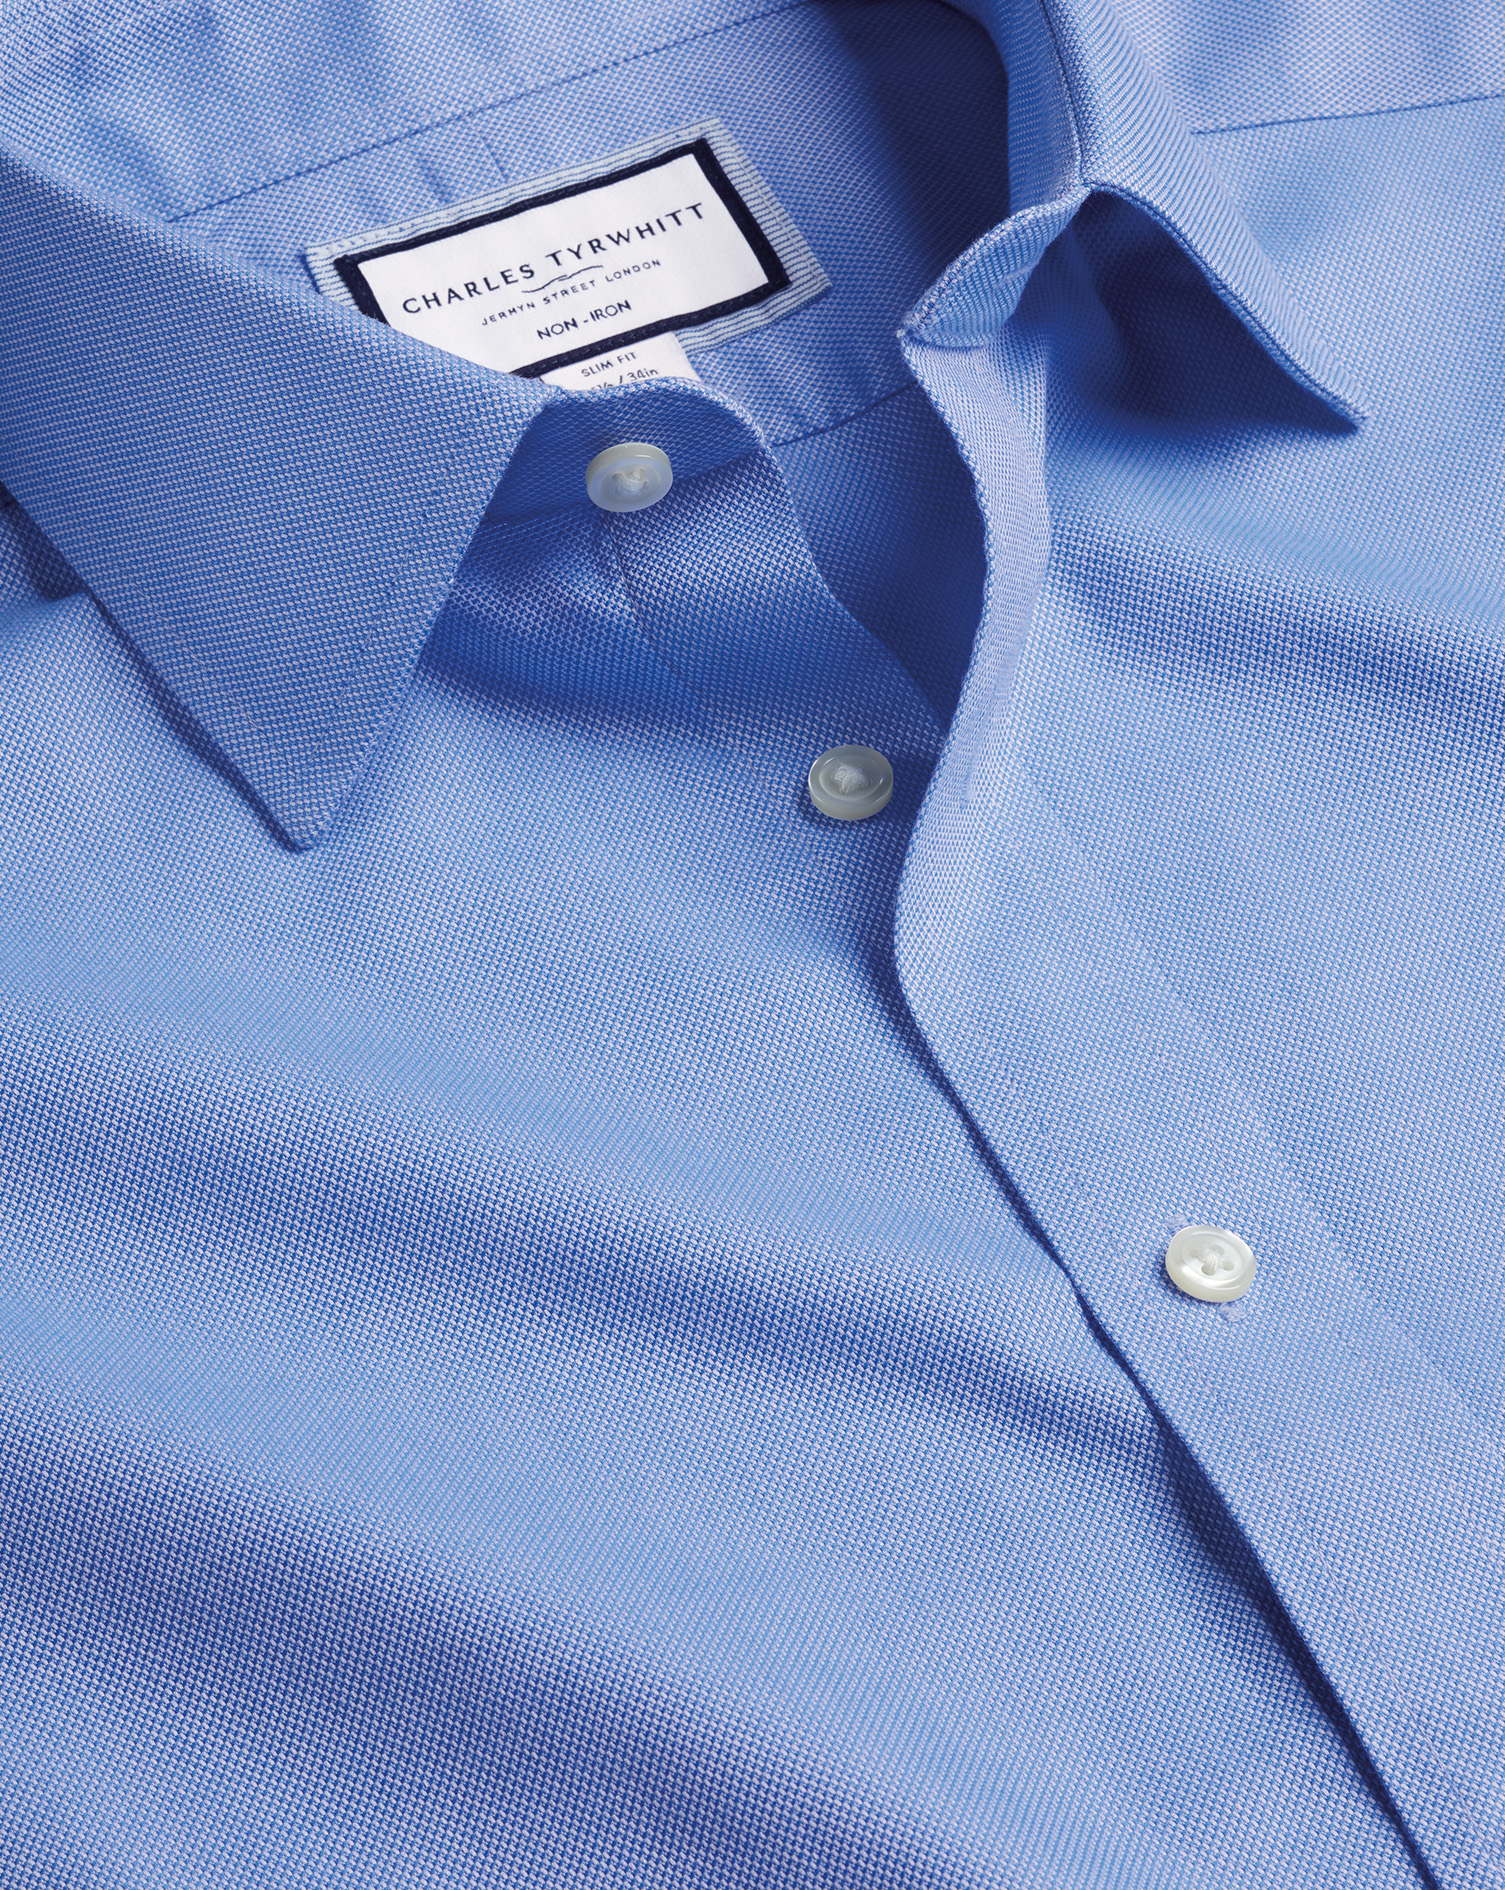 Men's Charles Tyrwhitt Non-Iron Royal Oxford Dress Shirt - Ocean Blue French Cuff Size XXXL Cotton
